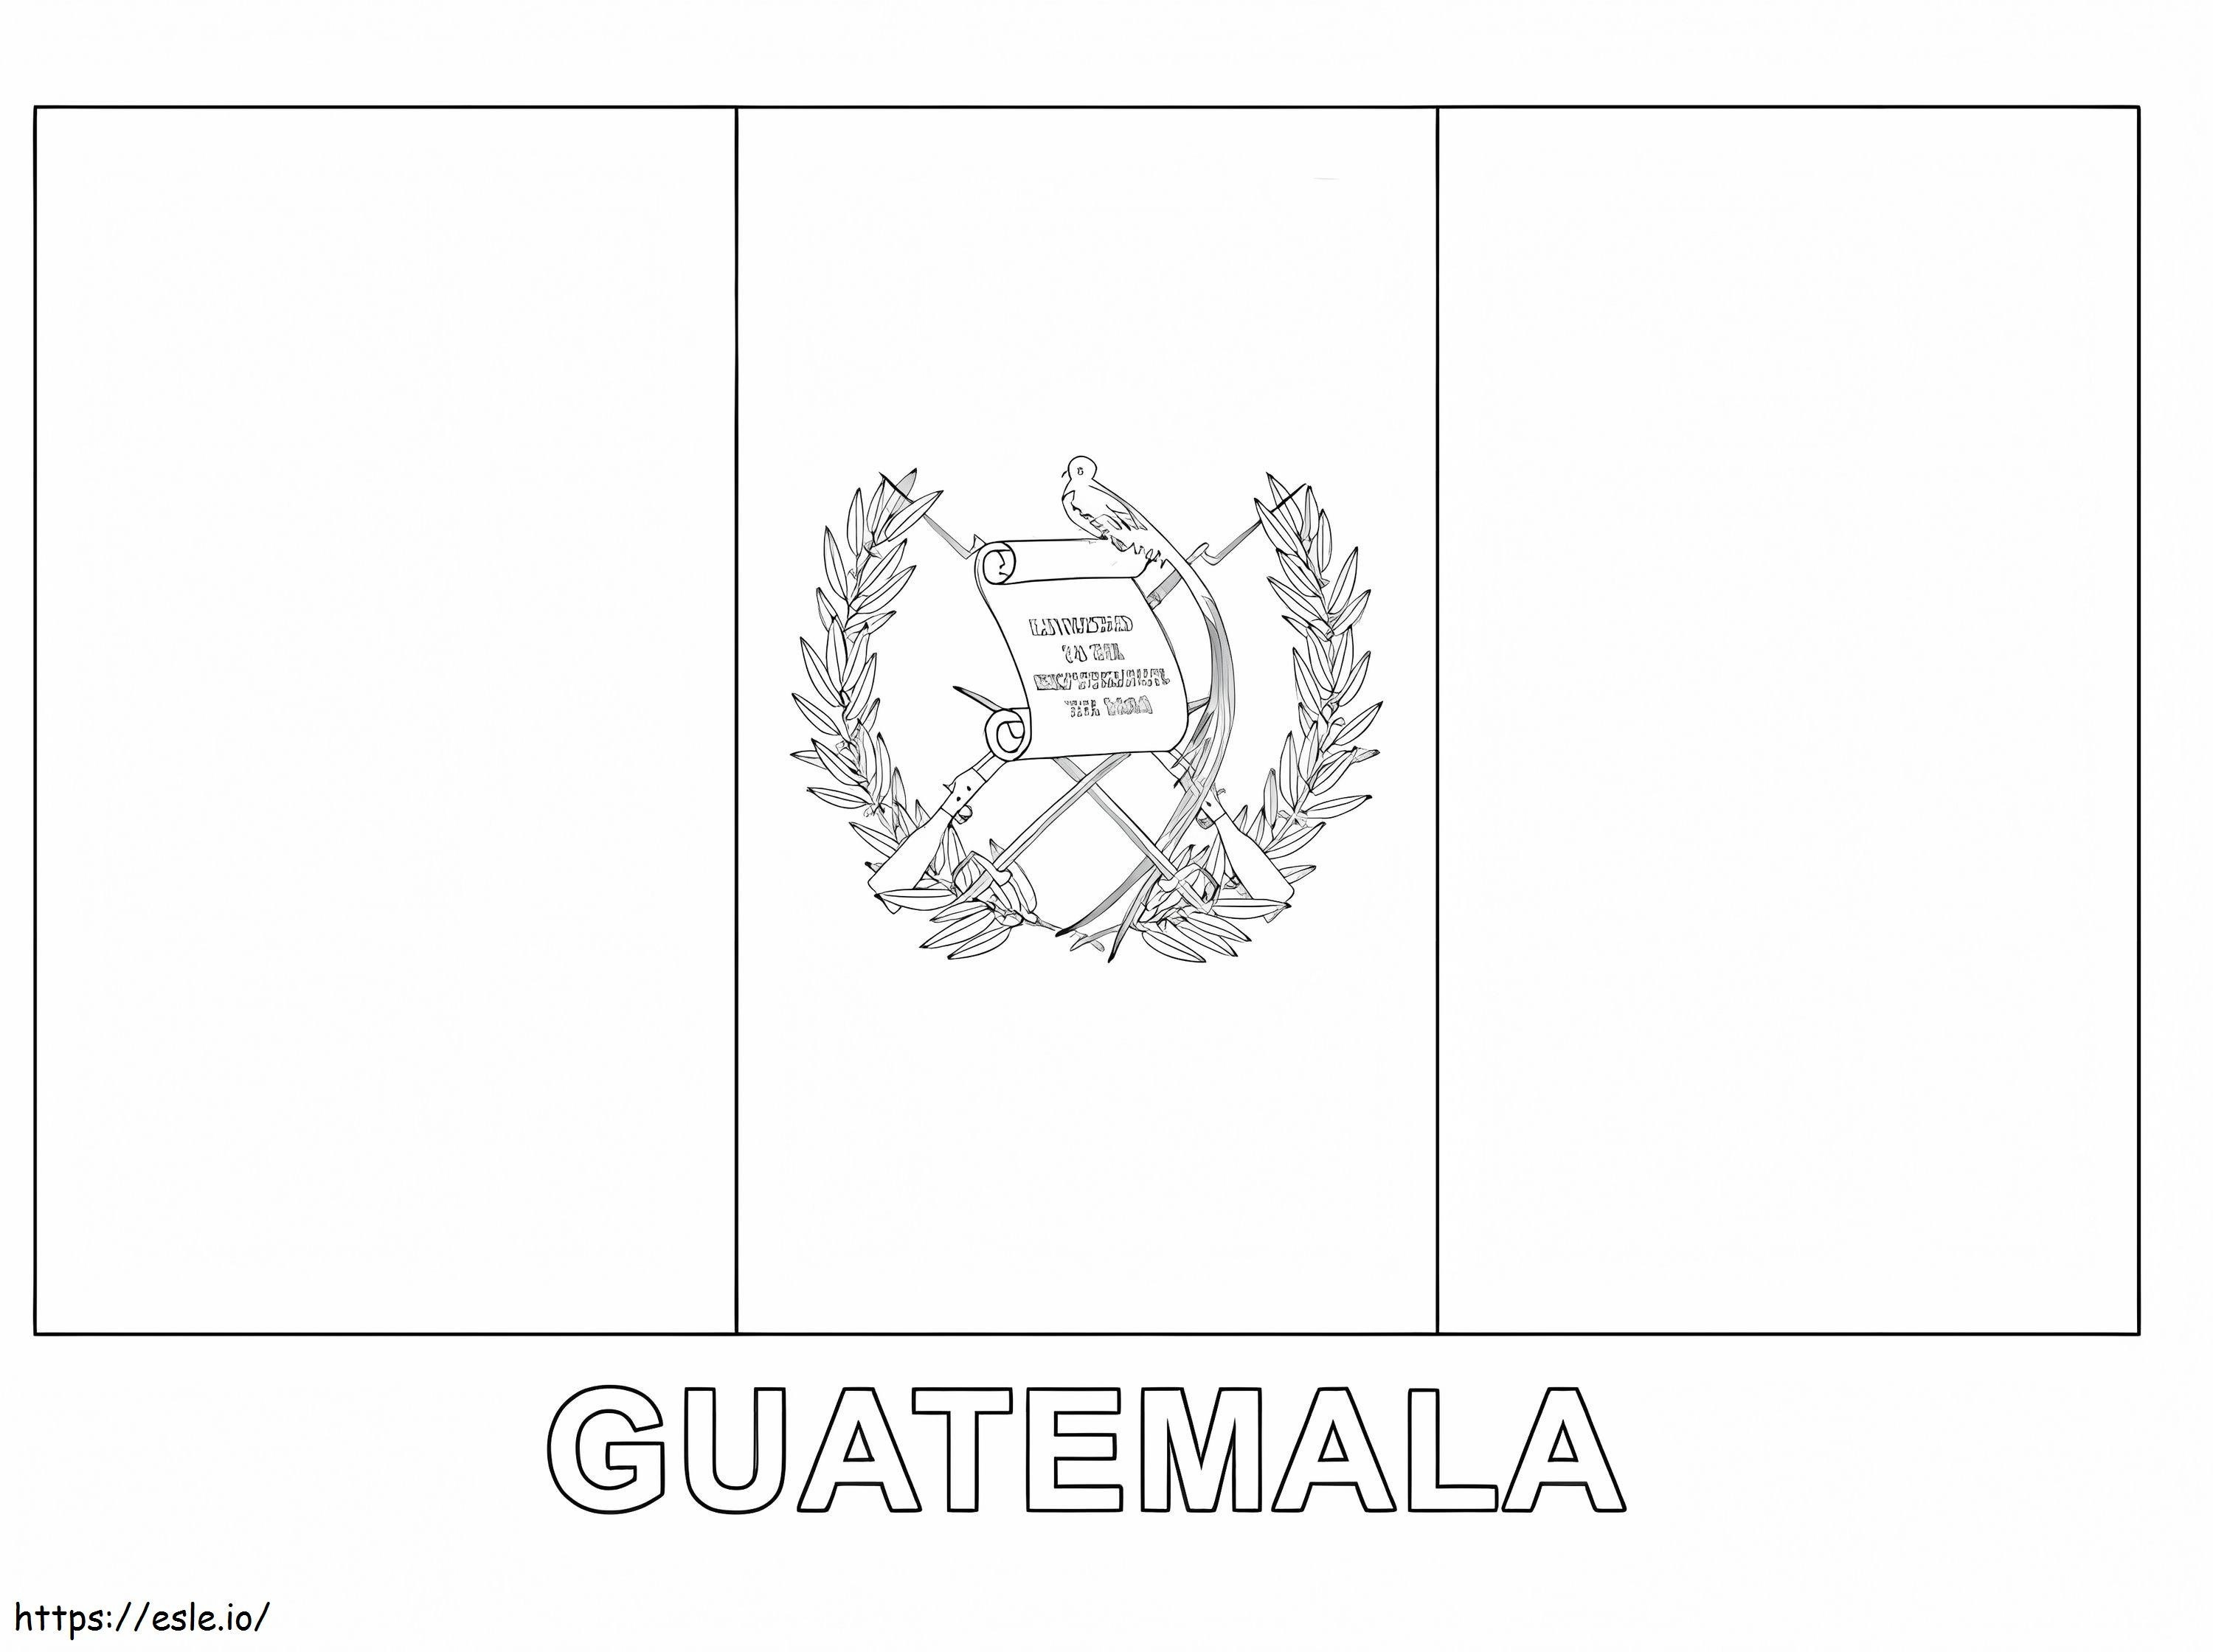 Flaga Gwatemali kolorowanka